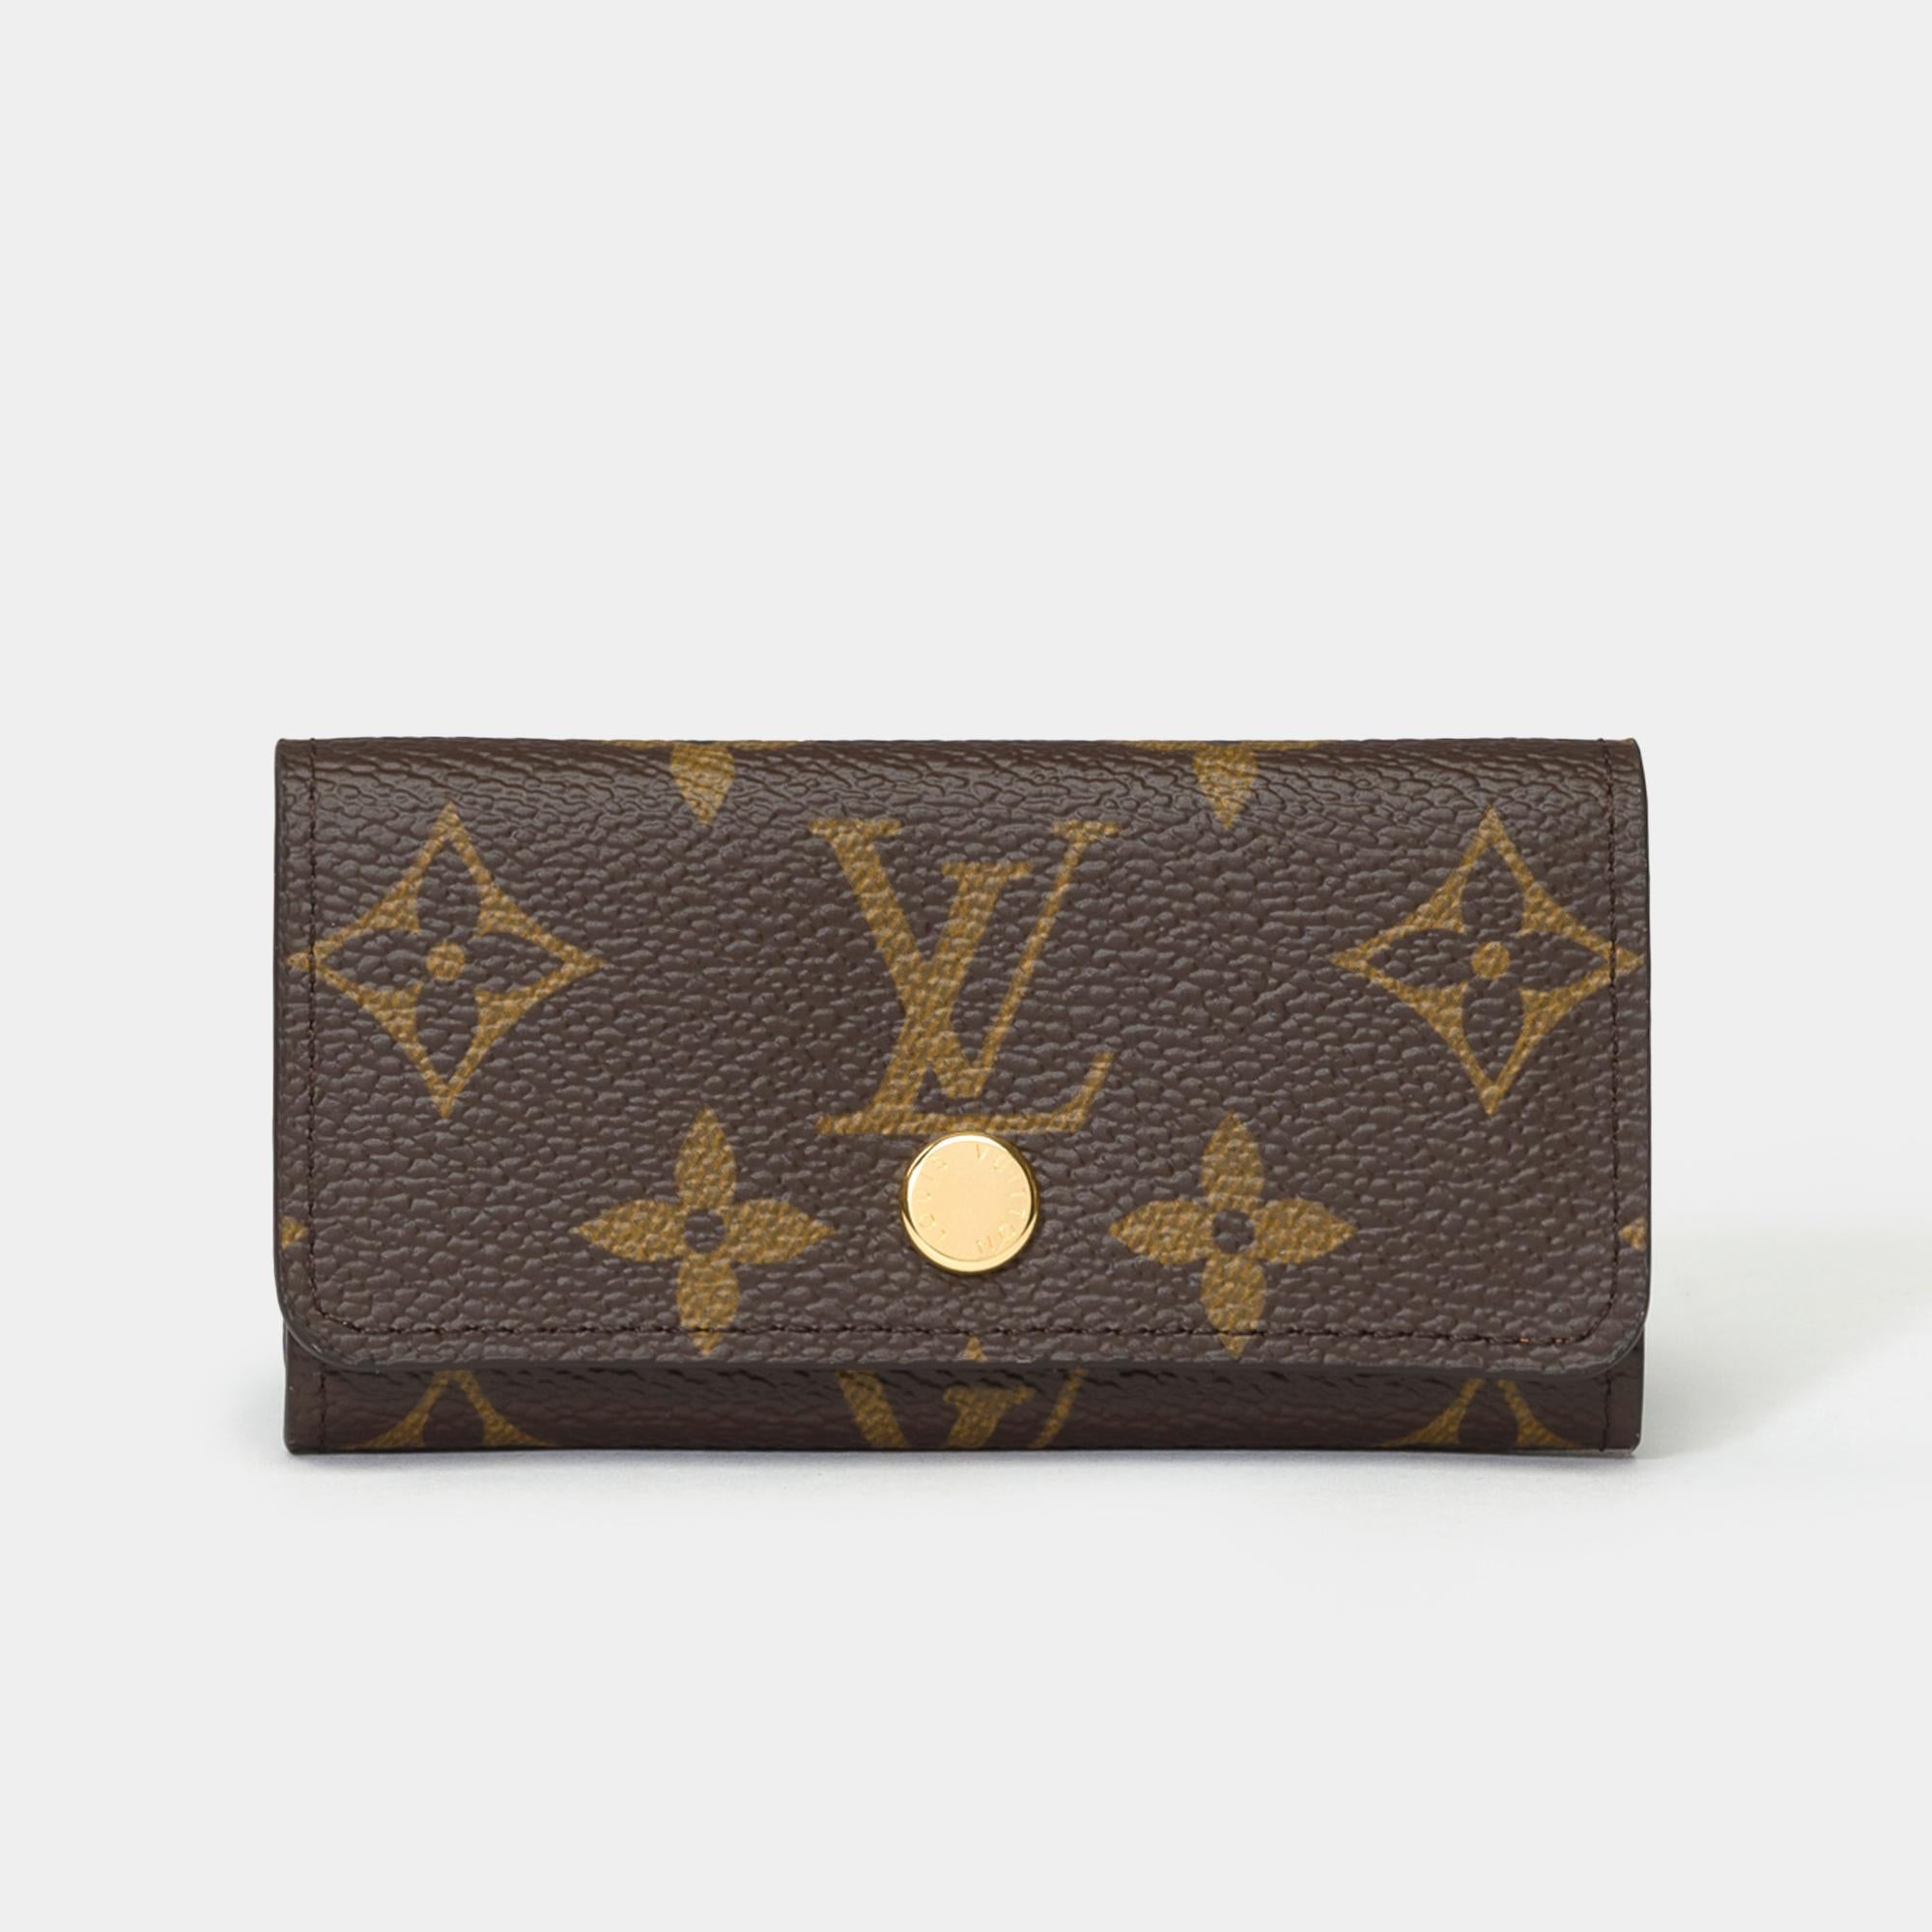 Louis​ ​Vuitton​ ​brown​ ​monogram​ ​canvas​ ​keychain
Gold​ ​metal​ ​snap​ ​closure
4​ ​key​ ​rings
Signature:​ ​